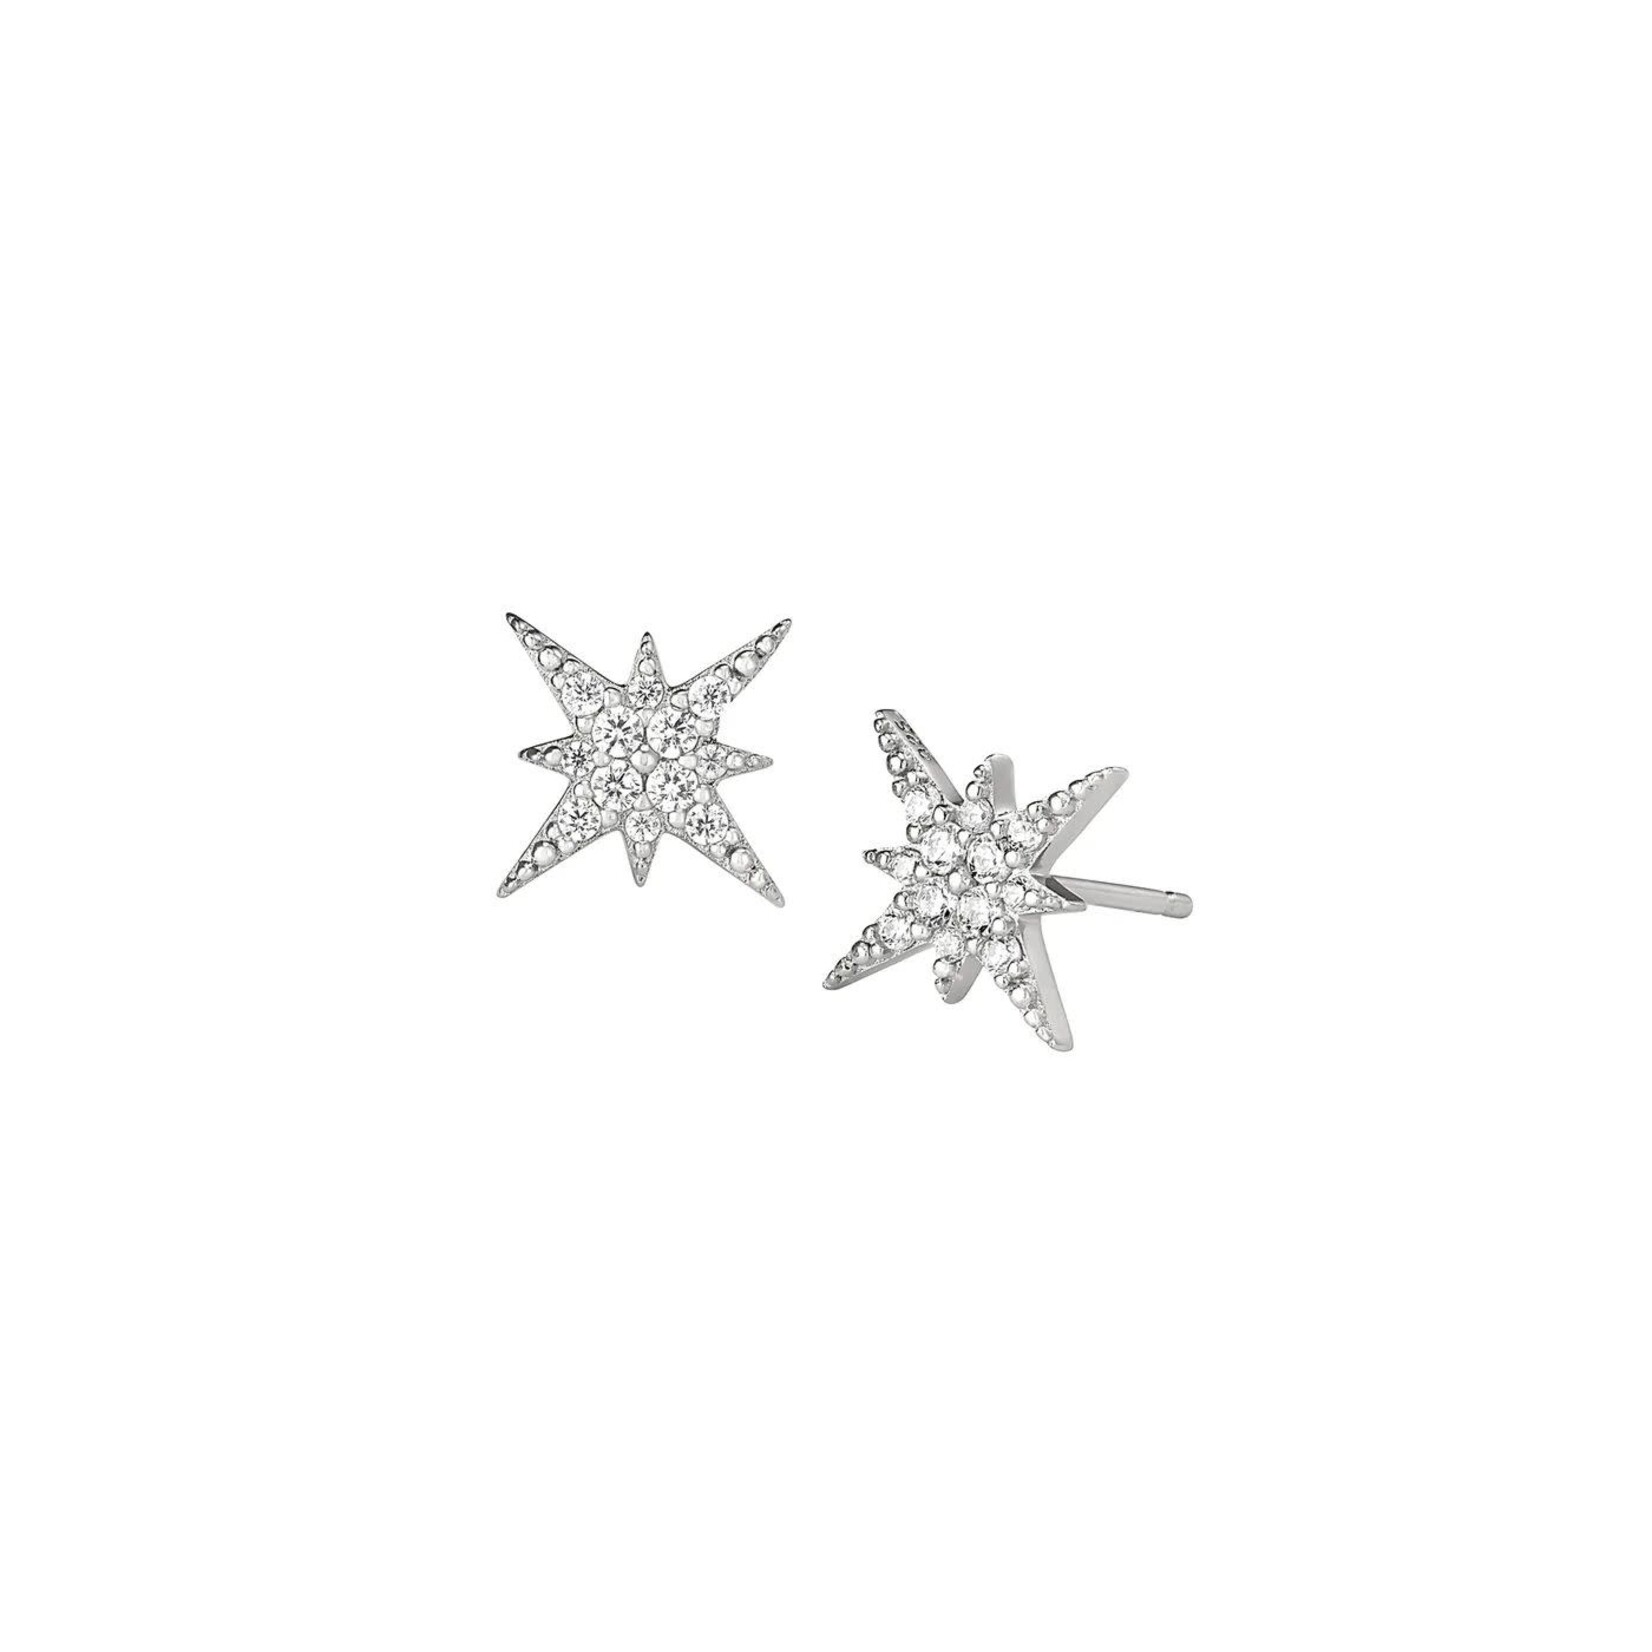 KELLY WATERS INC. Sterling Silver Starburst Simulated Diamonds Earrings